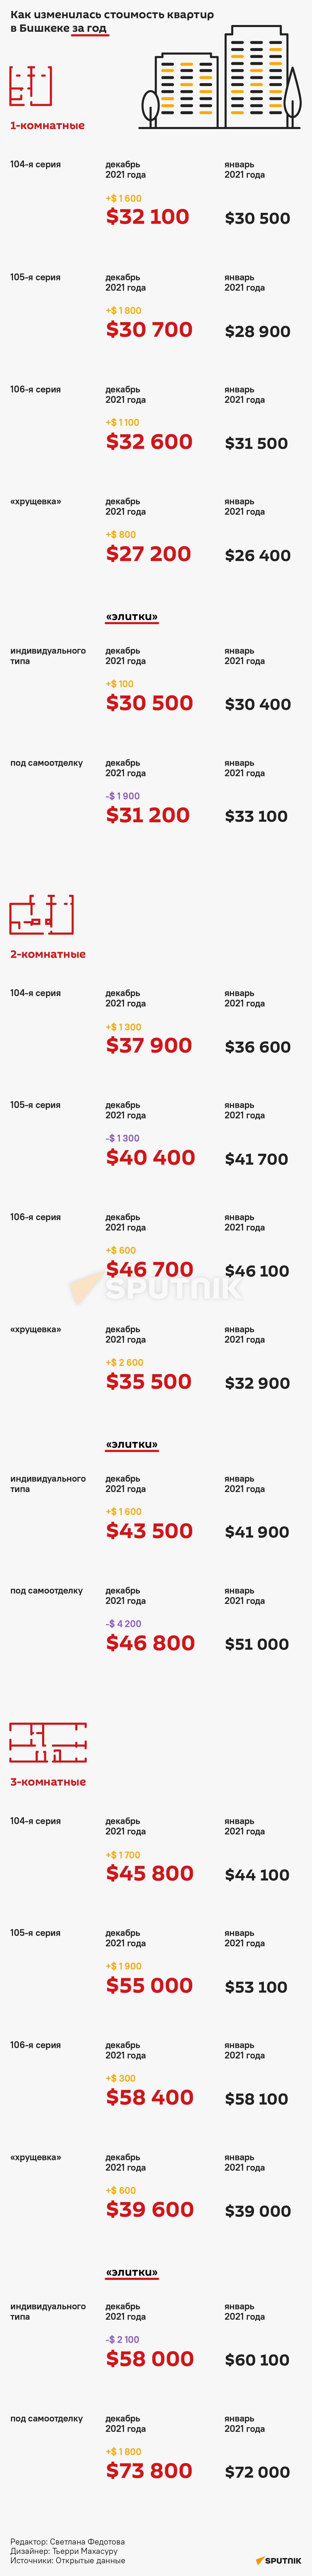 Продажа квартир в Бишкеке за год - Sputnik Кыргызстан